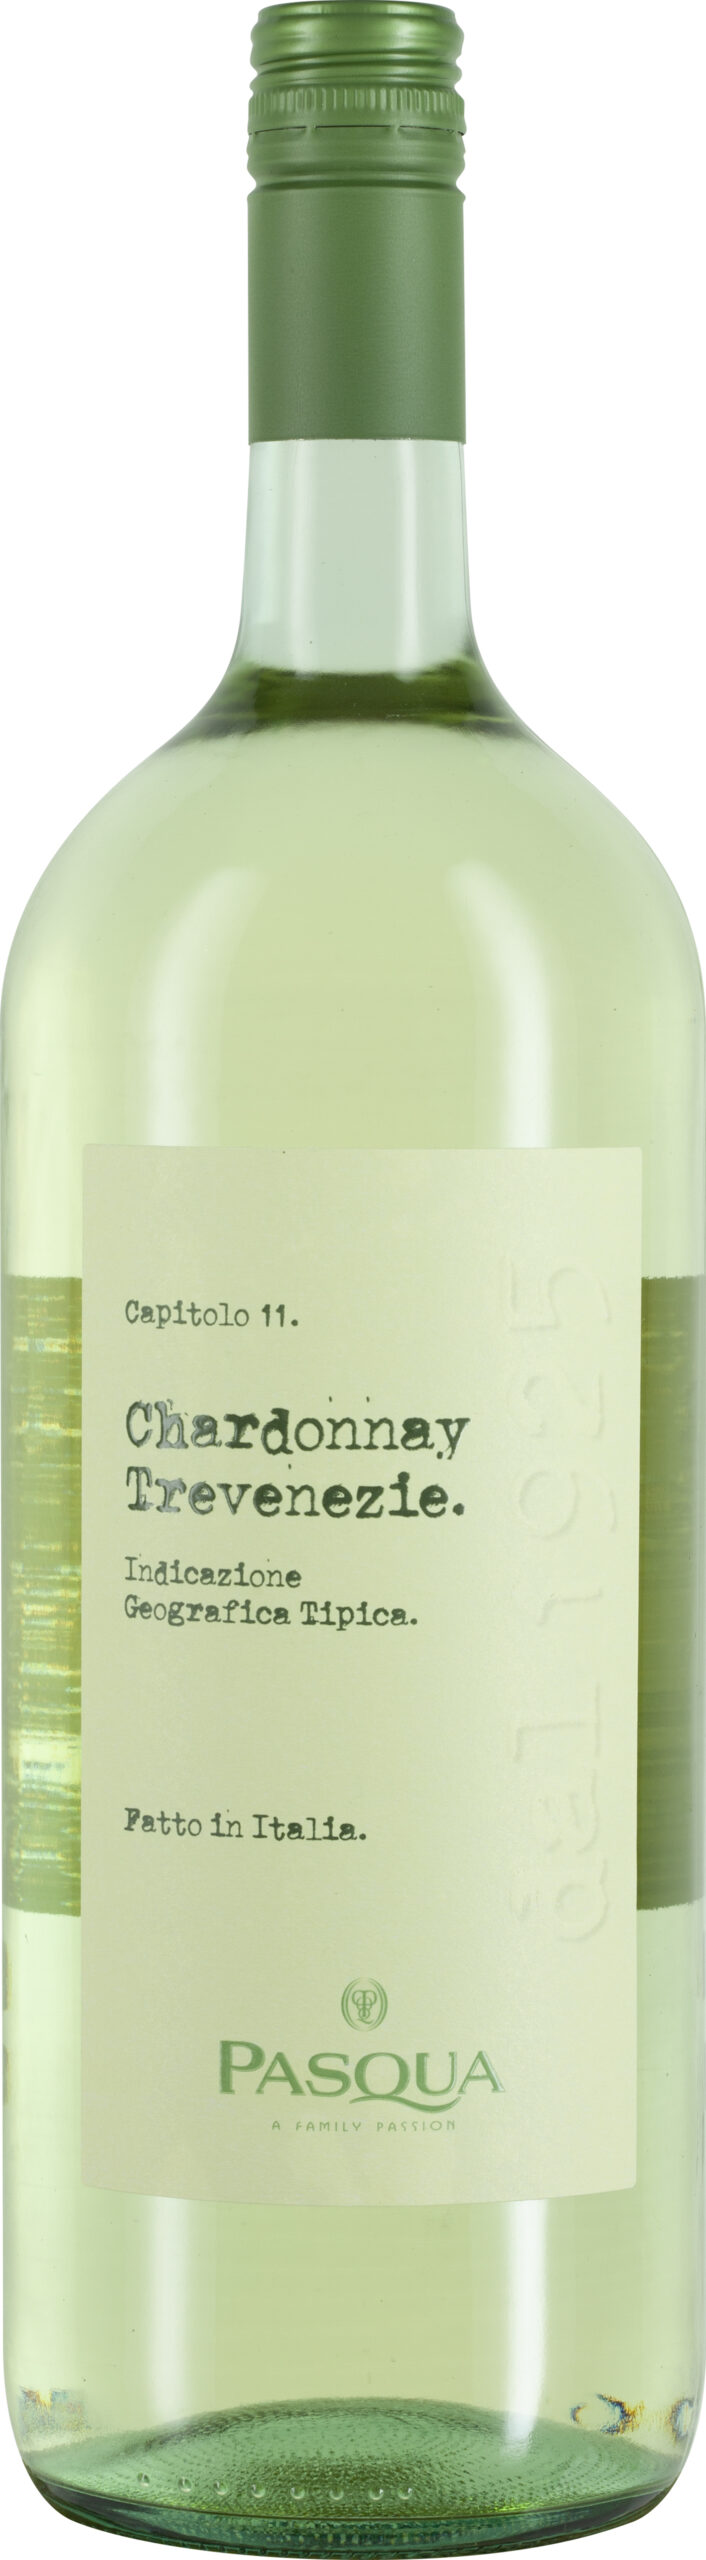 Pasqua Le Collezioni, Chardonnay Trevenezie IGT - Schenk Weine